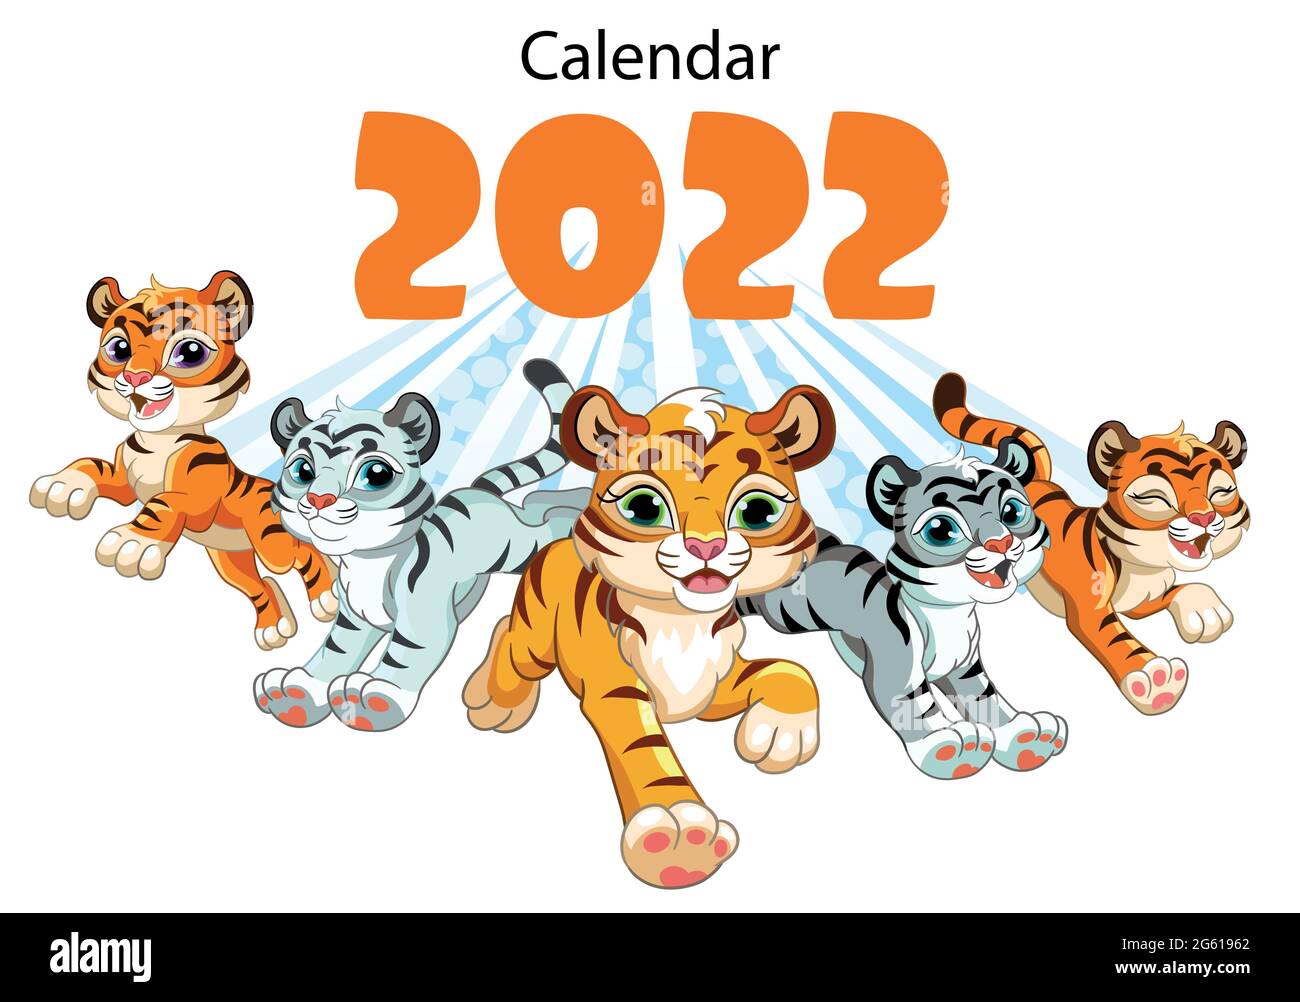 Horizontal desktop childrens calendar cover design for 2022 the year